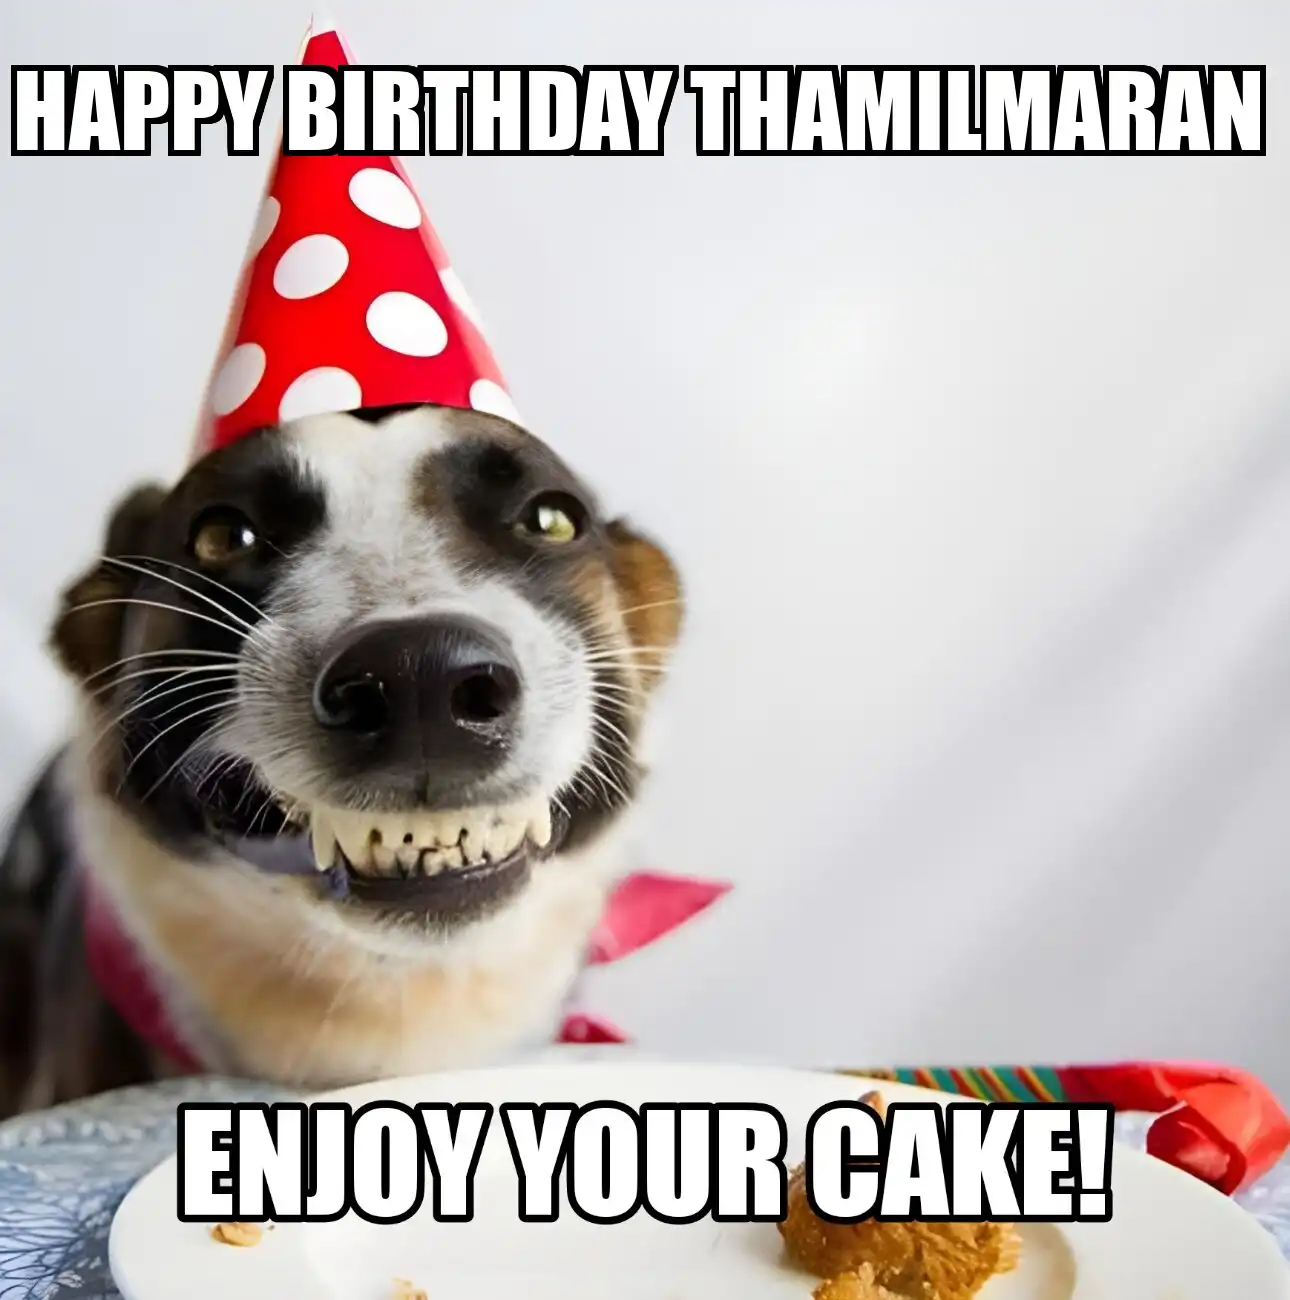 Happy Birthday Thamilmaran Enjoy Your Cake Dog Meme